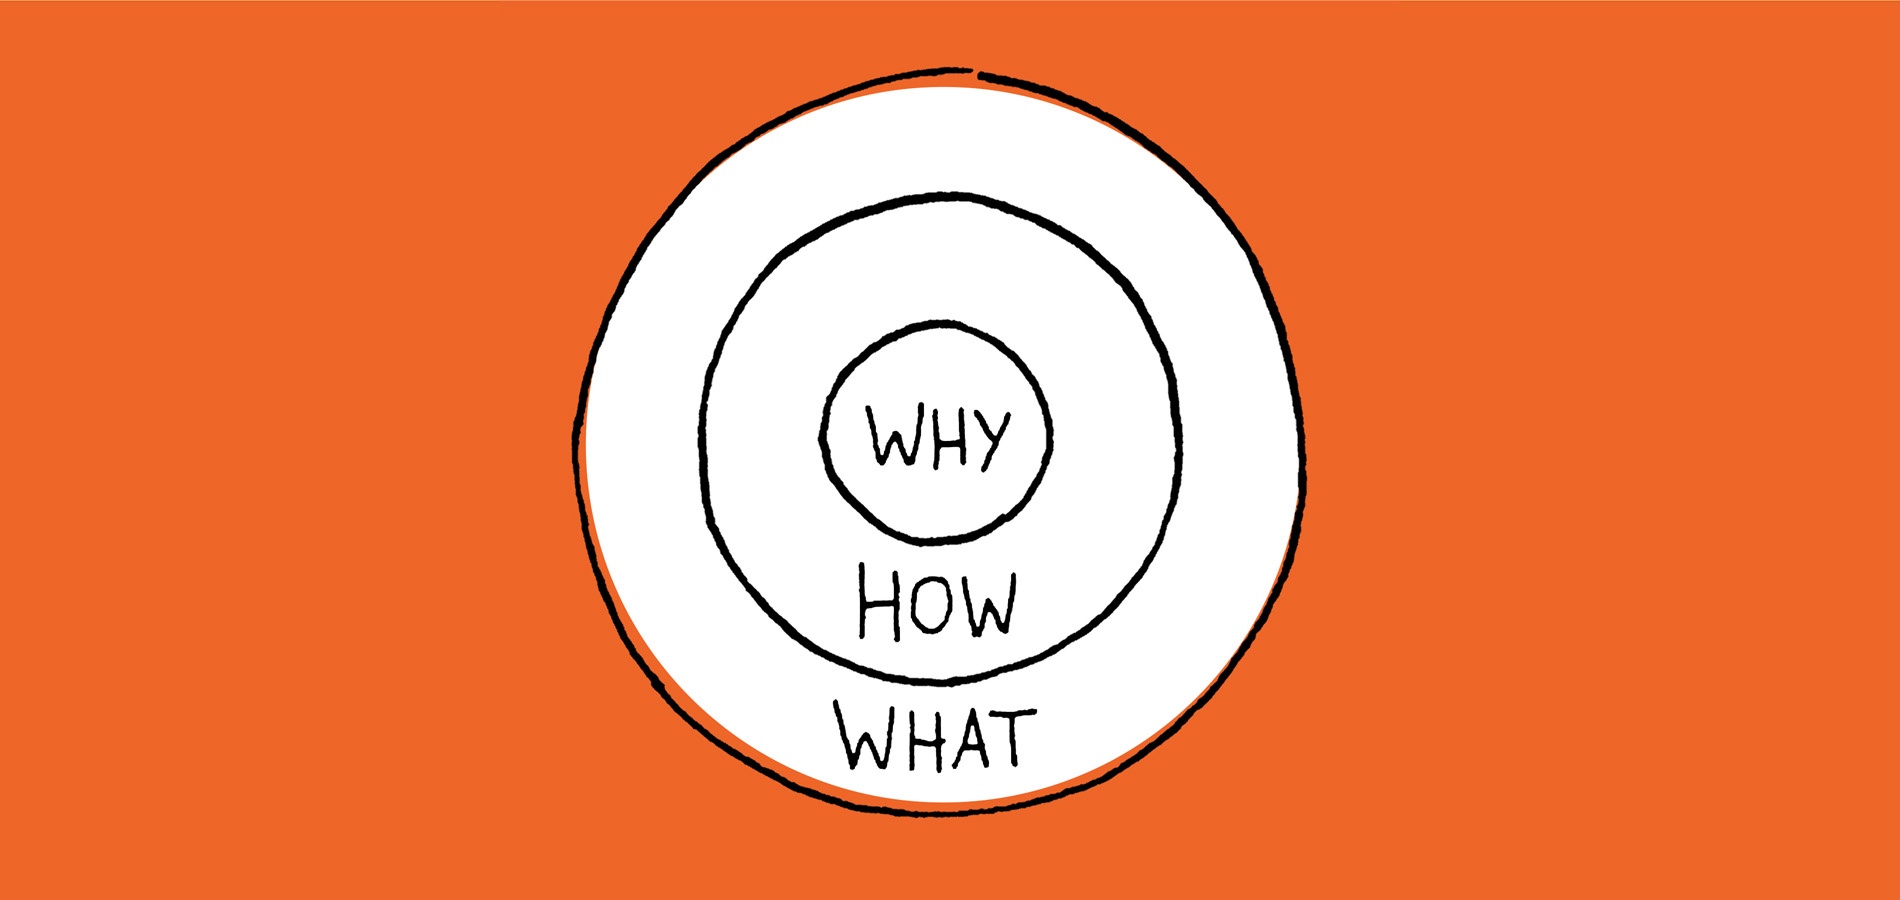 "Start With Why" by Simon Sinek bullseye graphic